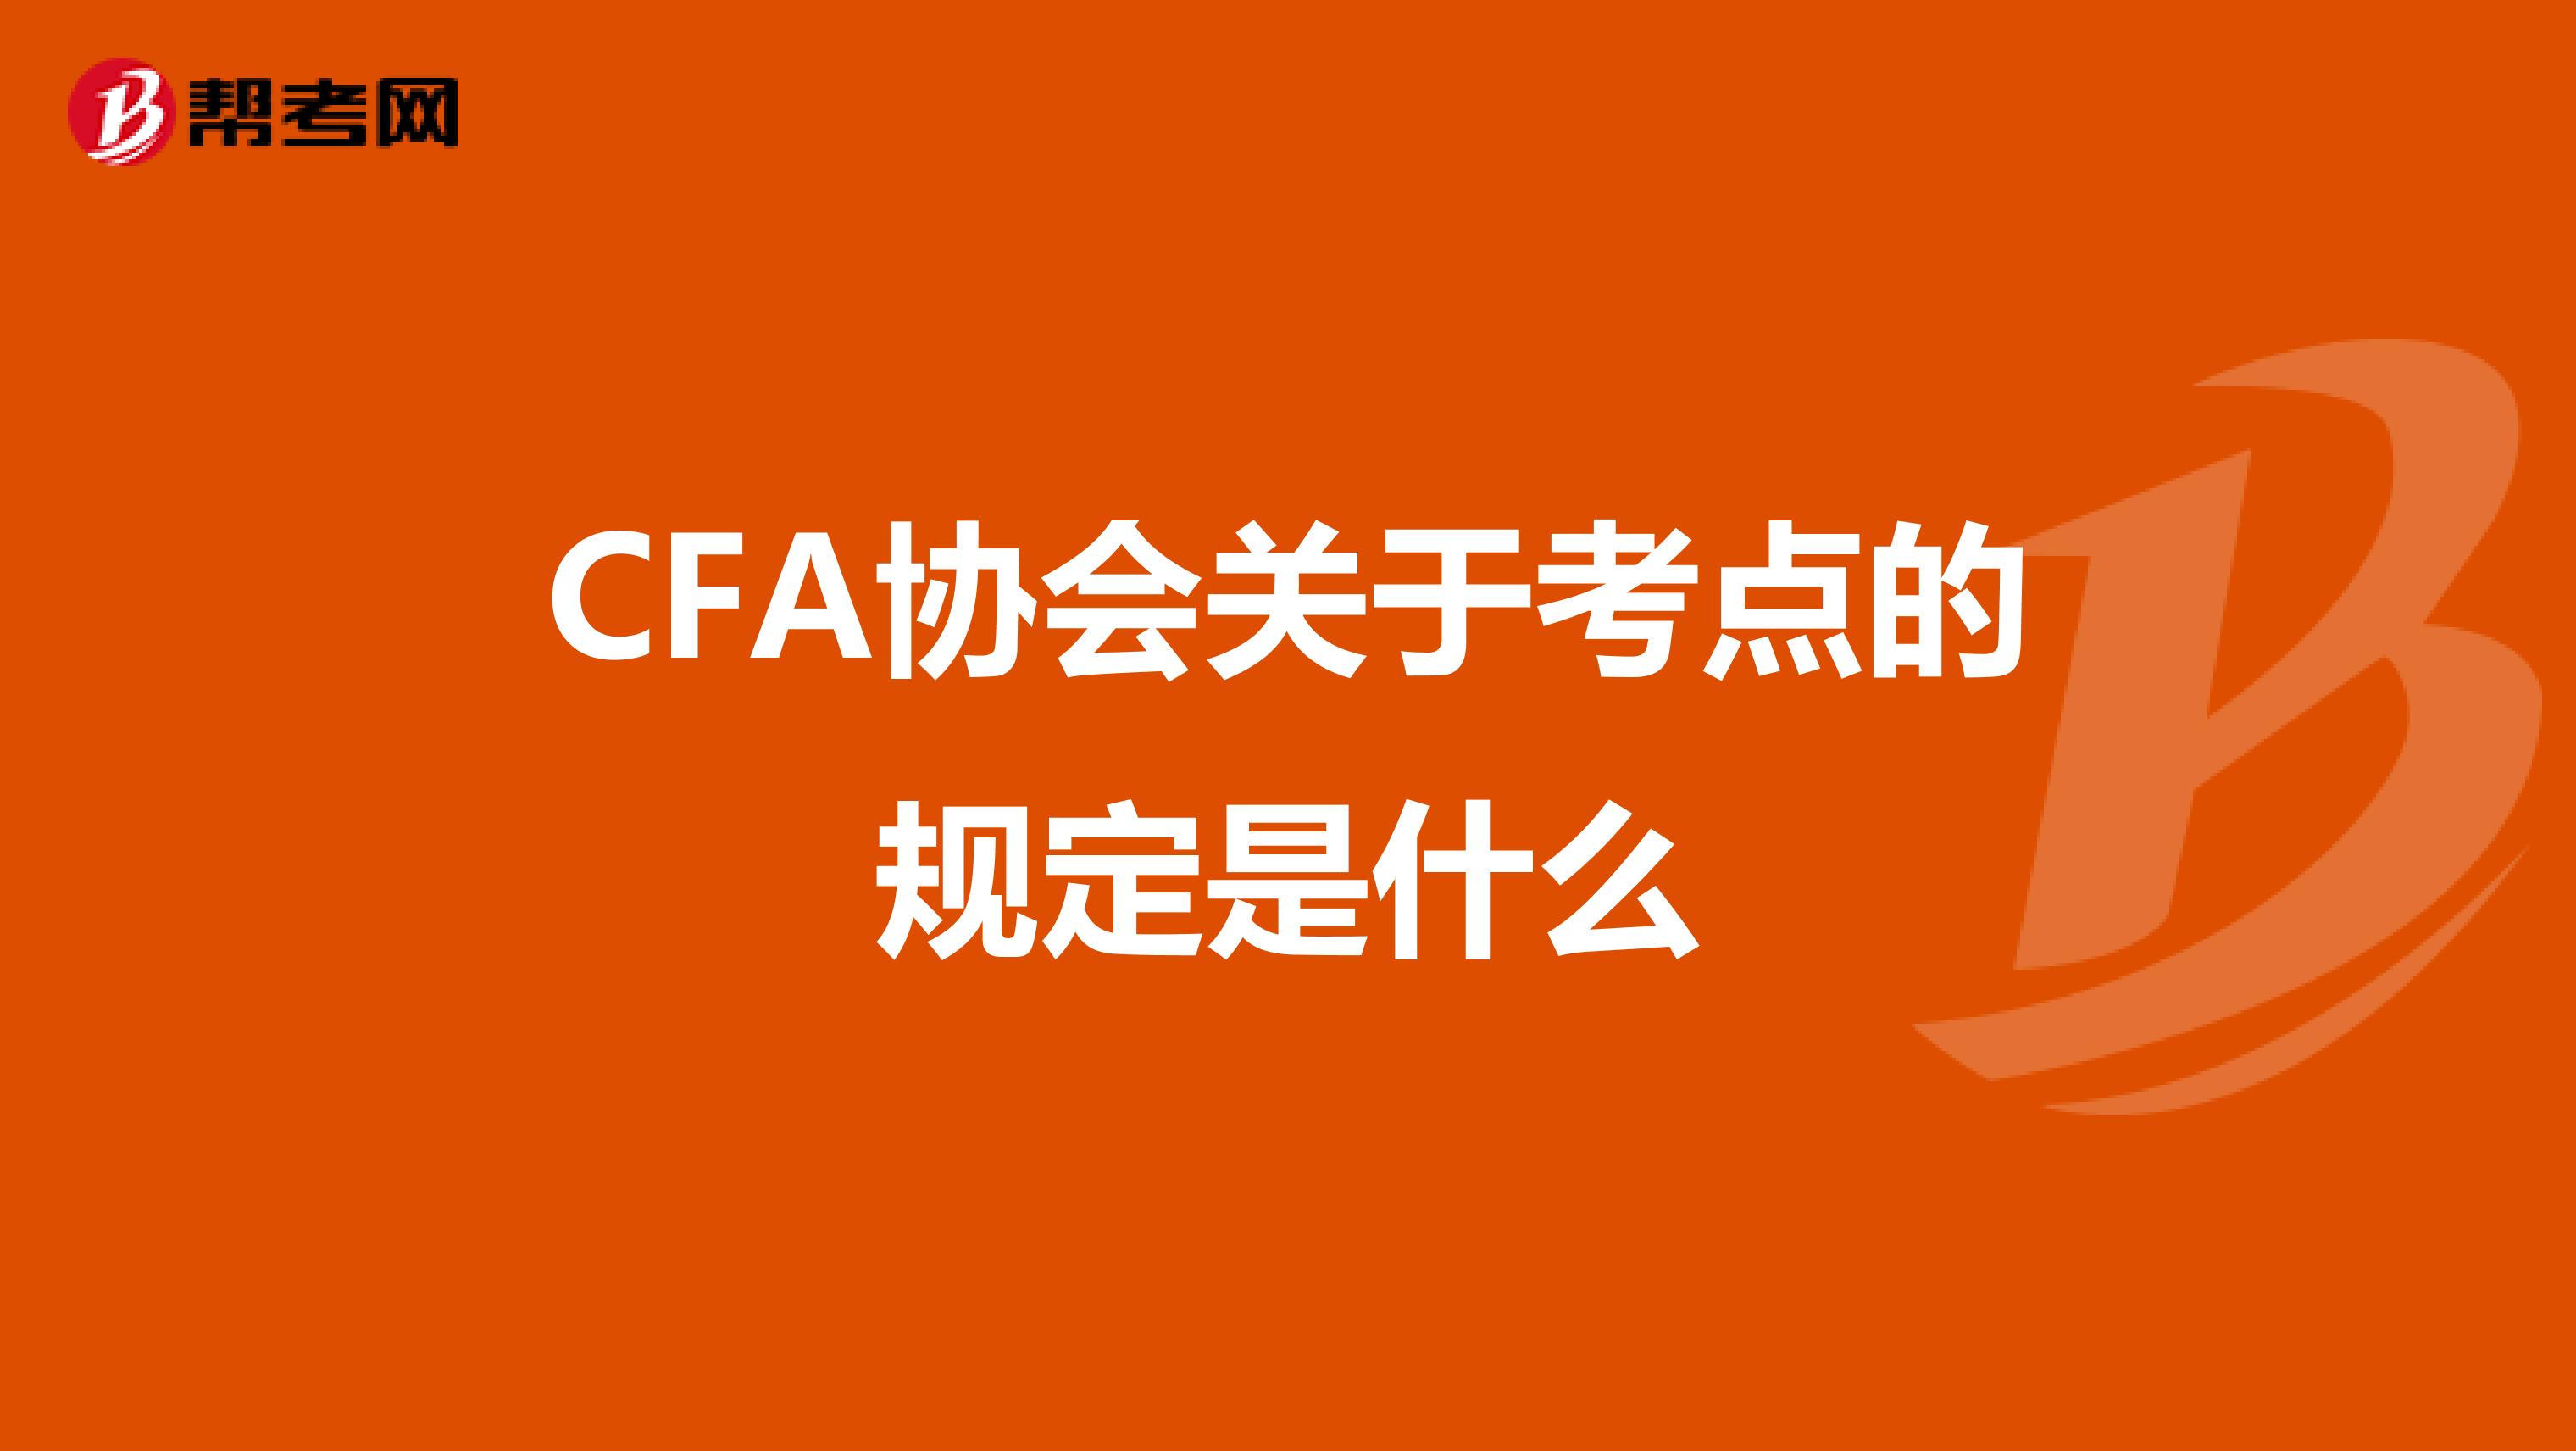 CFA协会关于考点的规定是什么